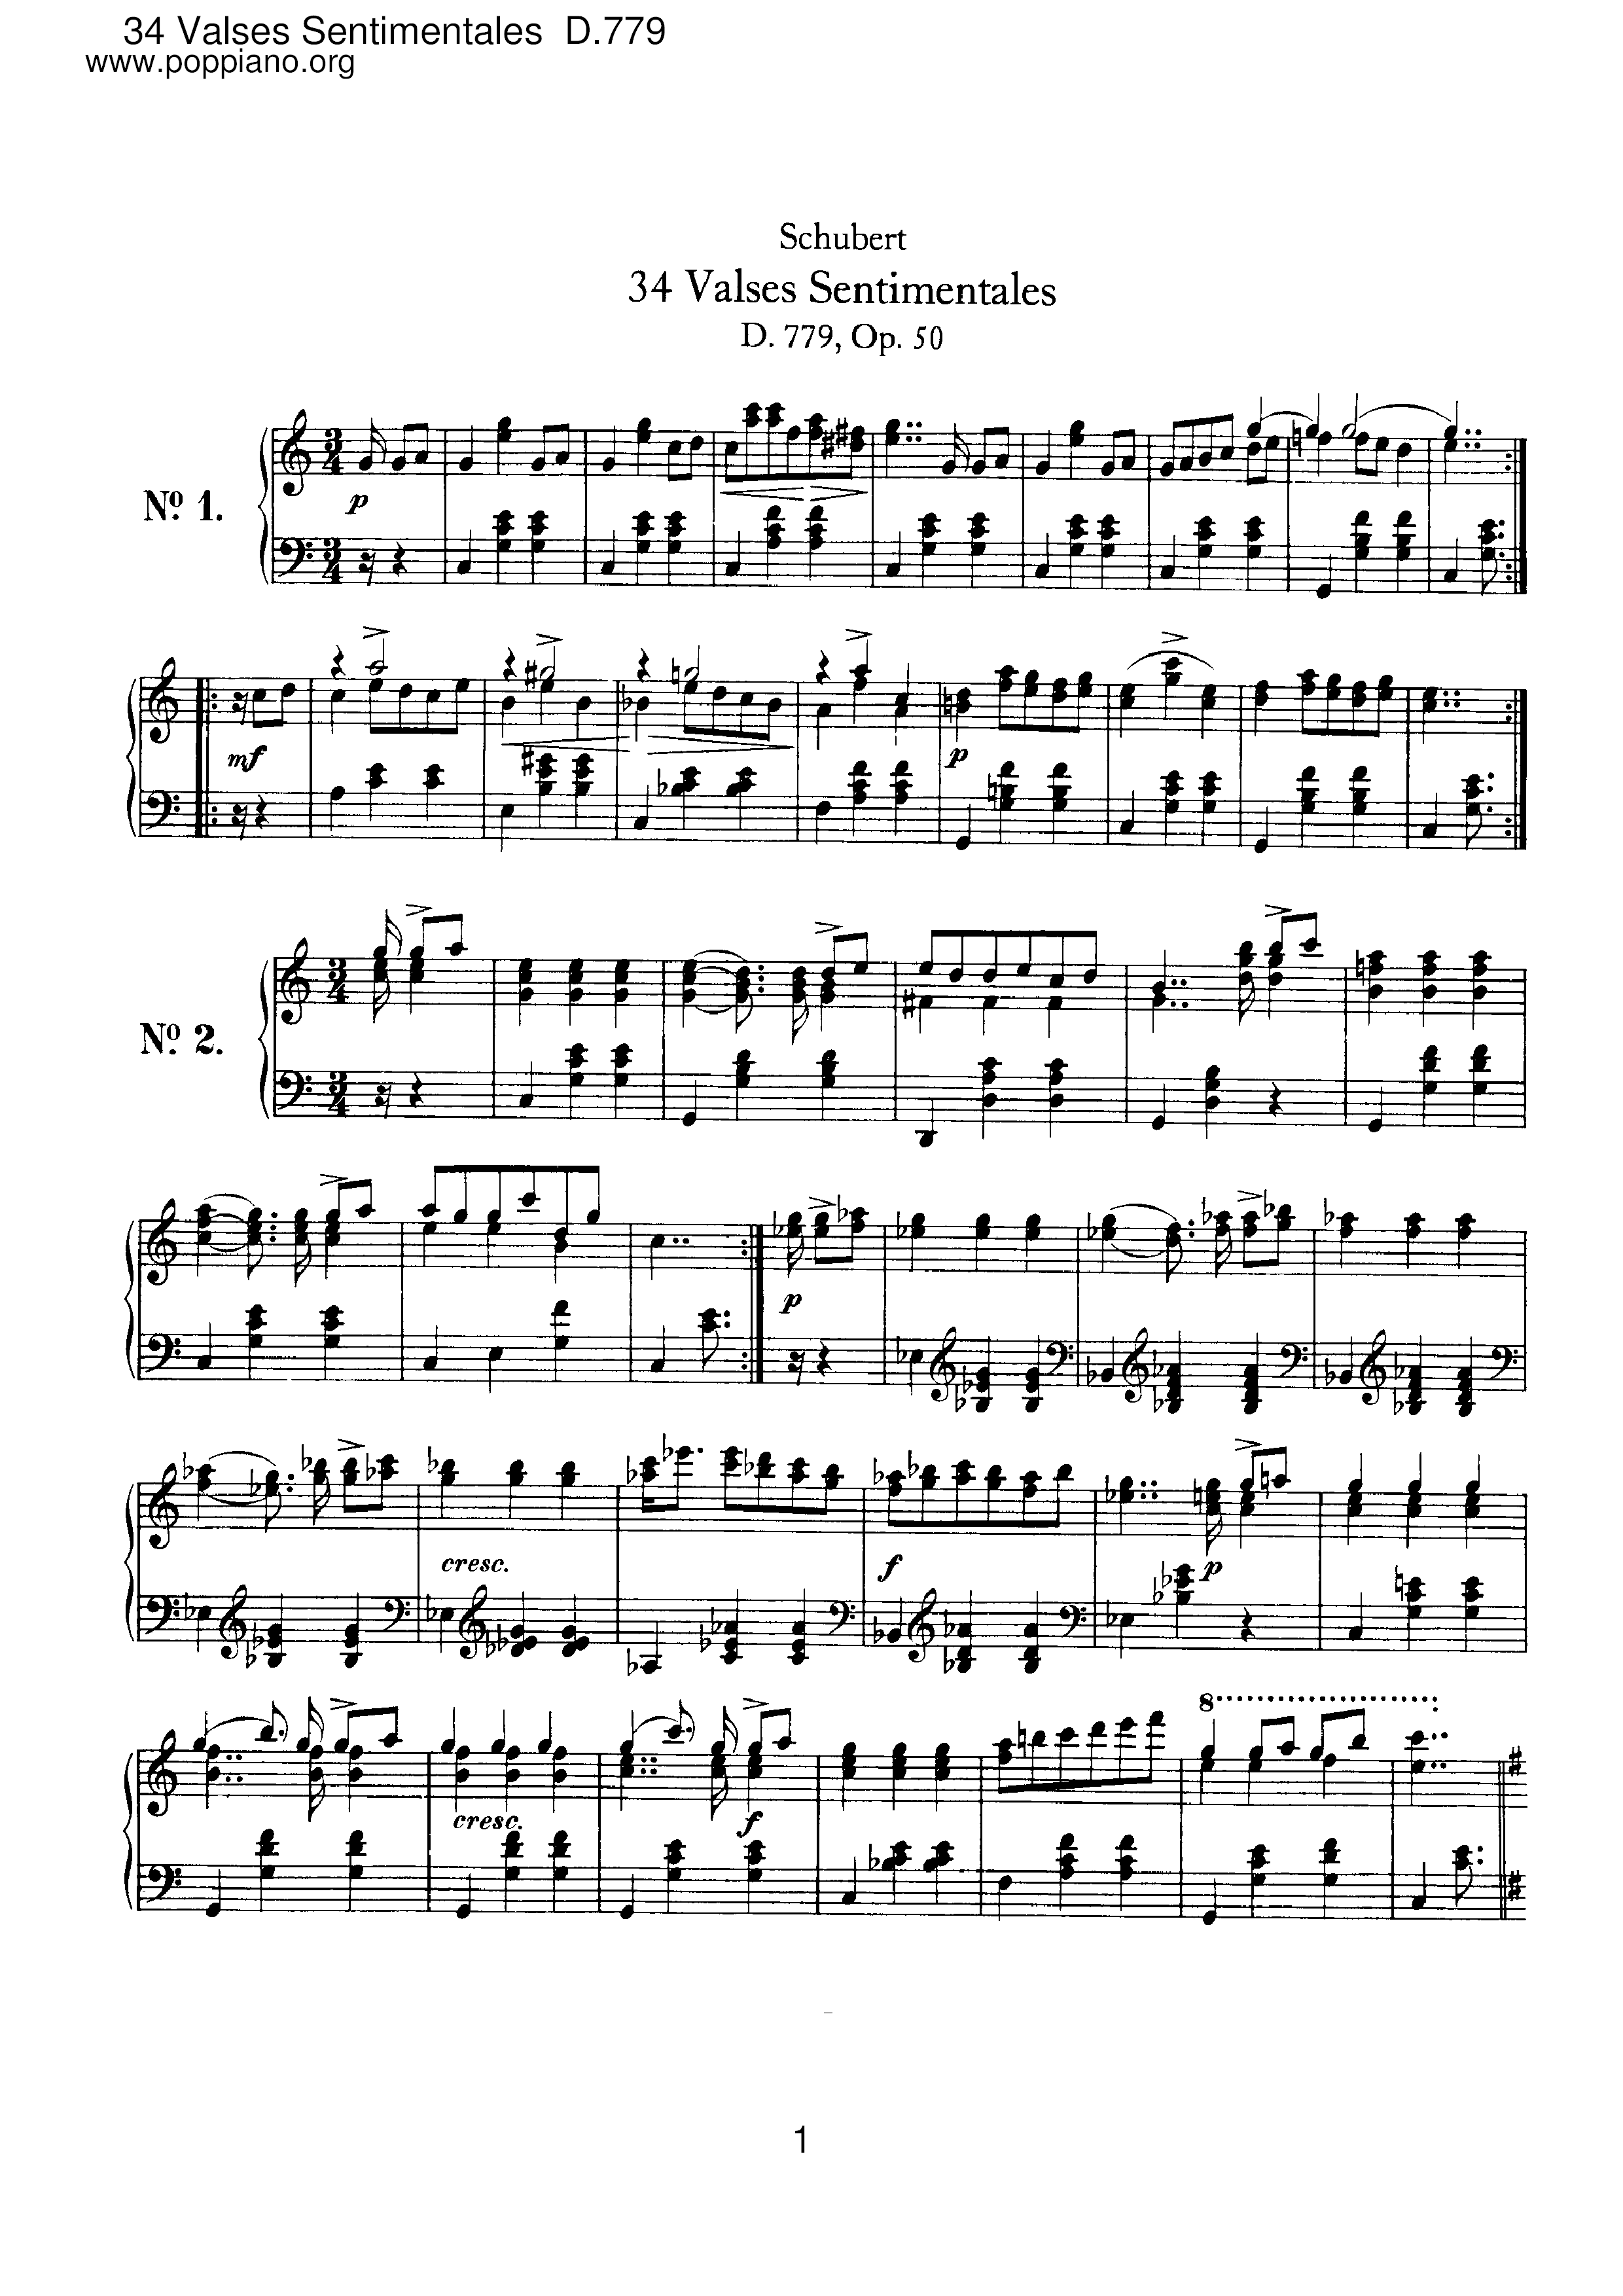 34 Valses Sentimentales, D.779 (Op.50)ピアノ譜